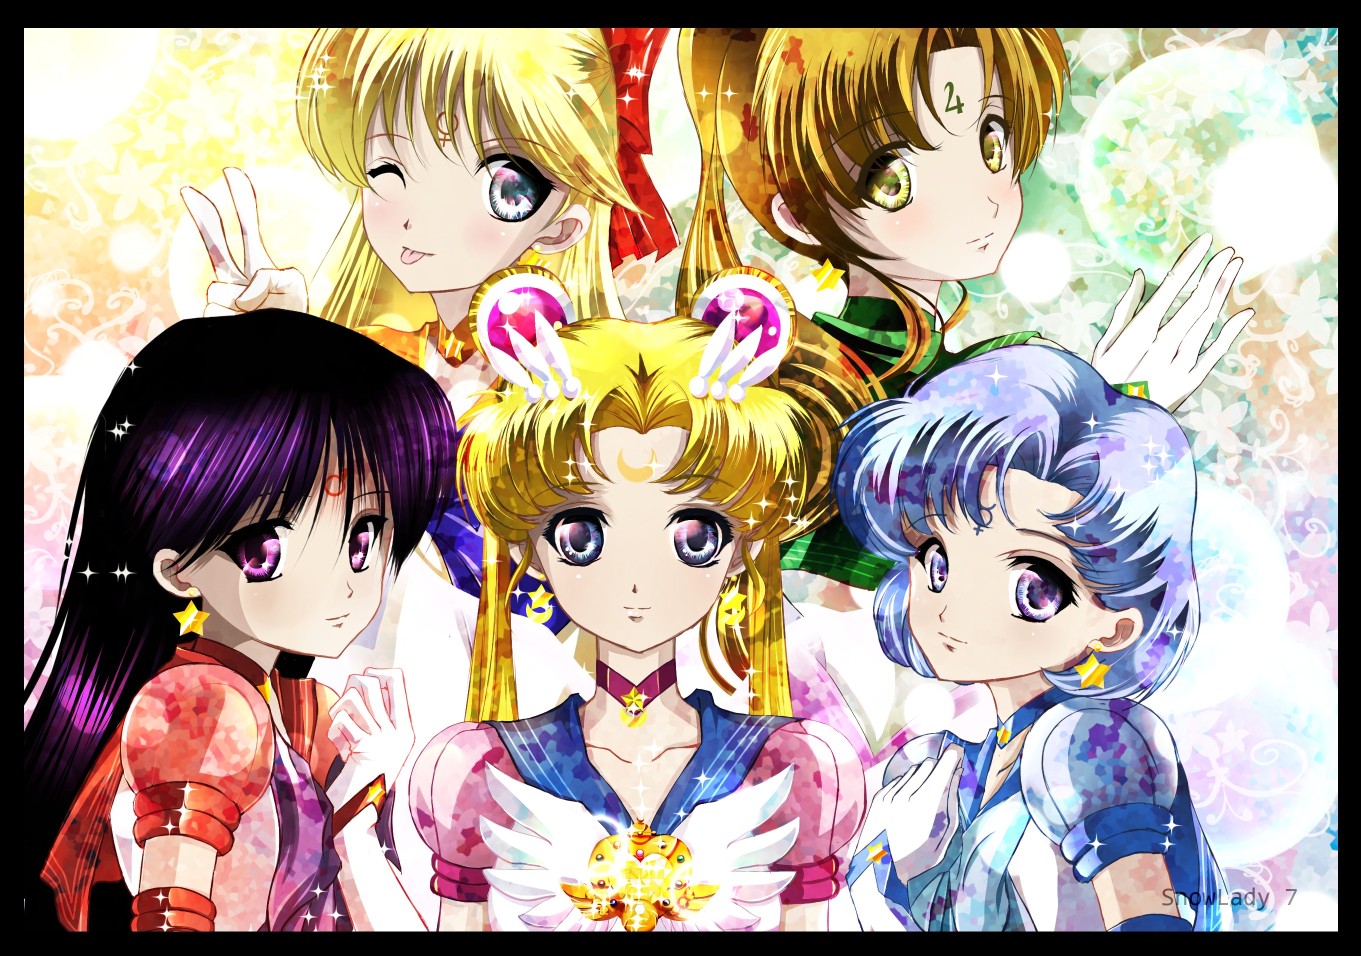 Sailor Moon Wallpaper by snowlady 7